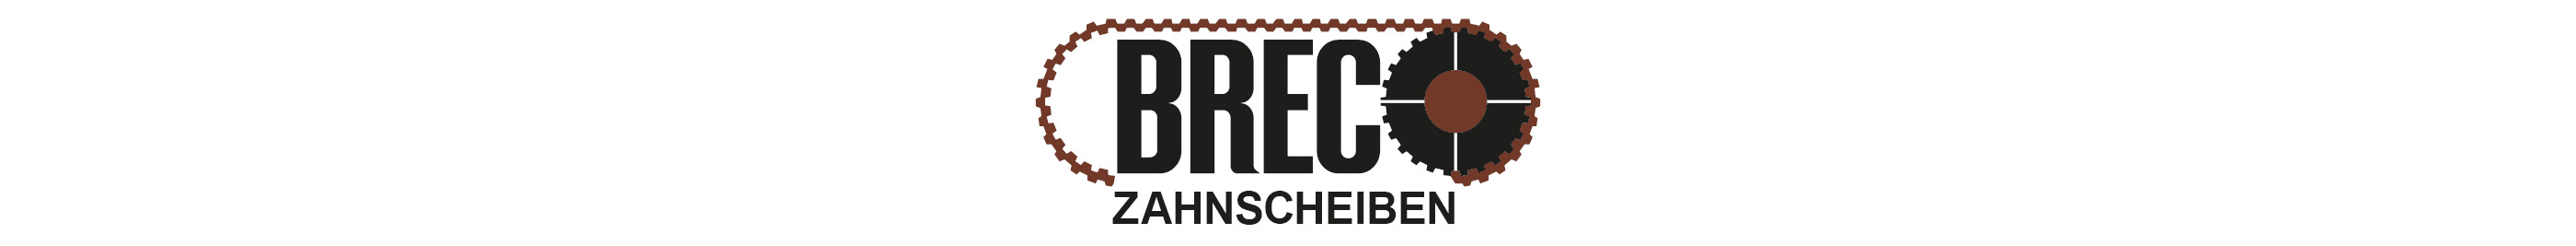 BRECO-Zahnscheiben_eShop.jpg